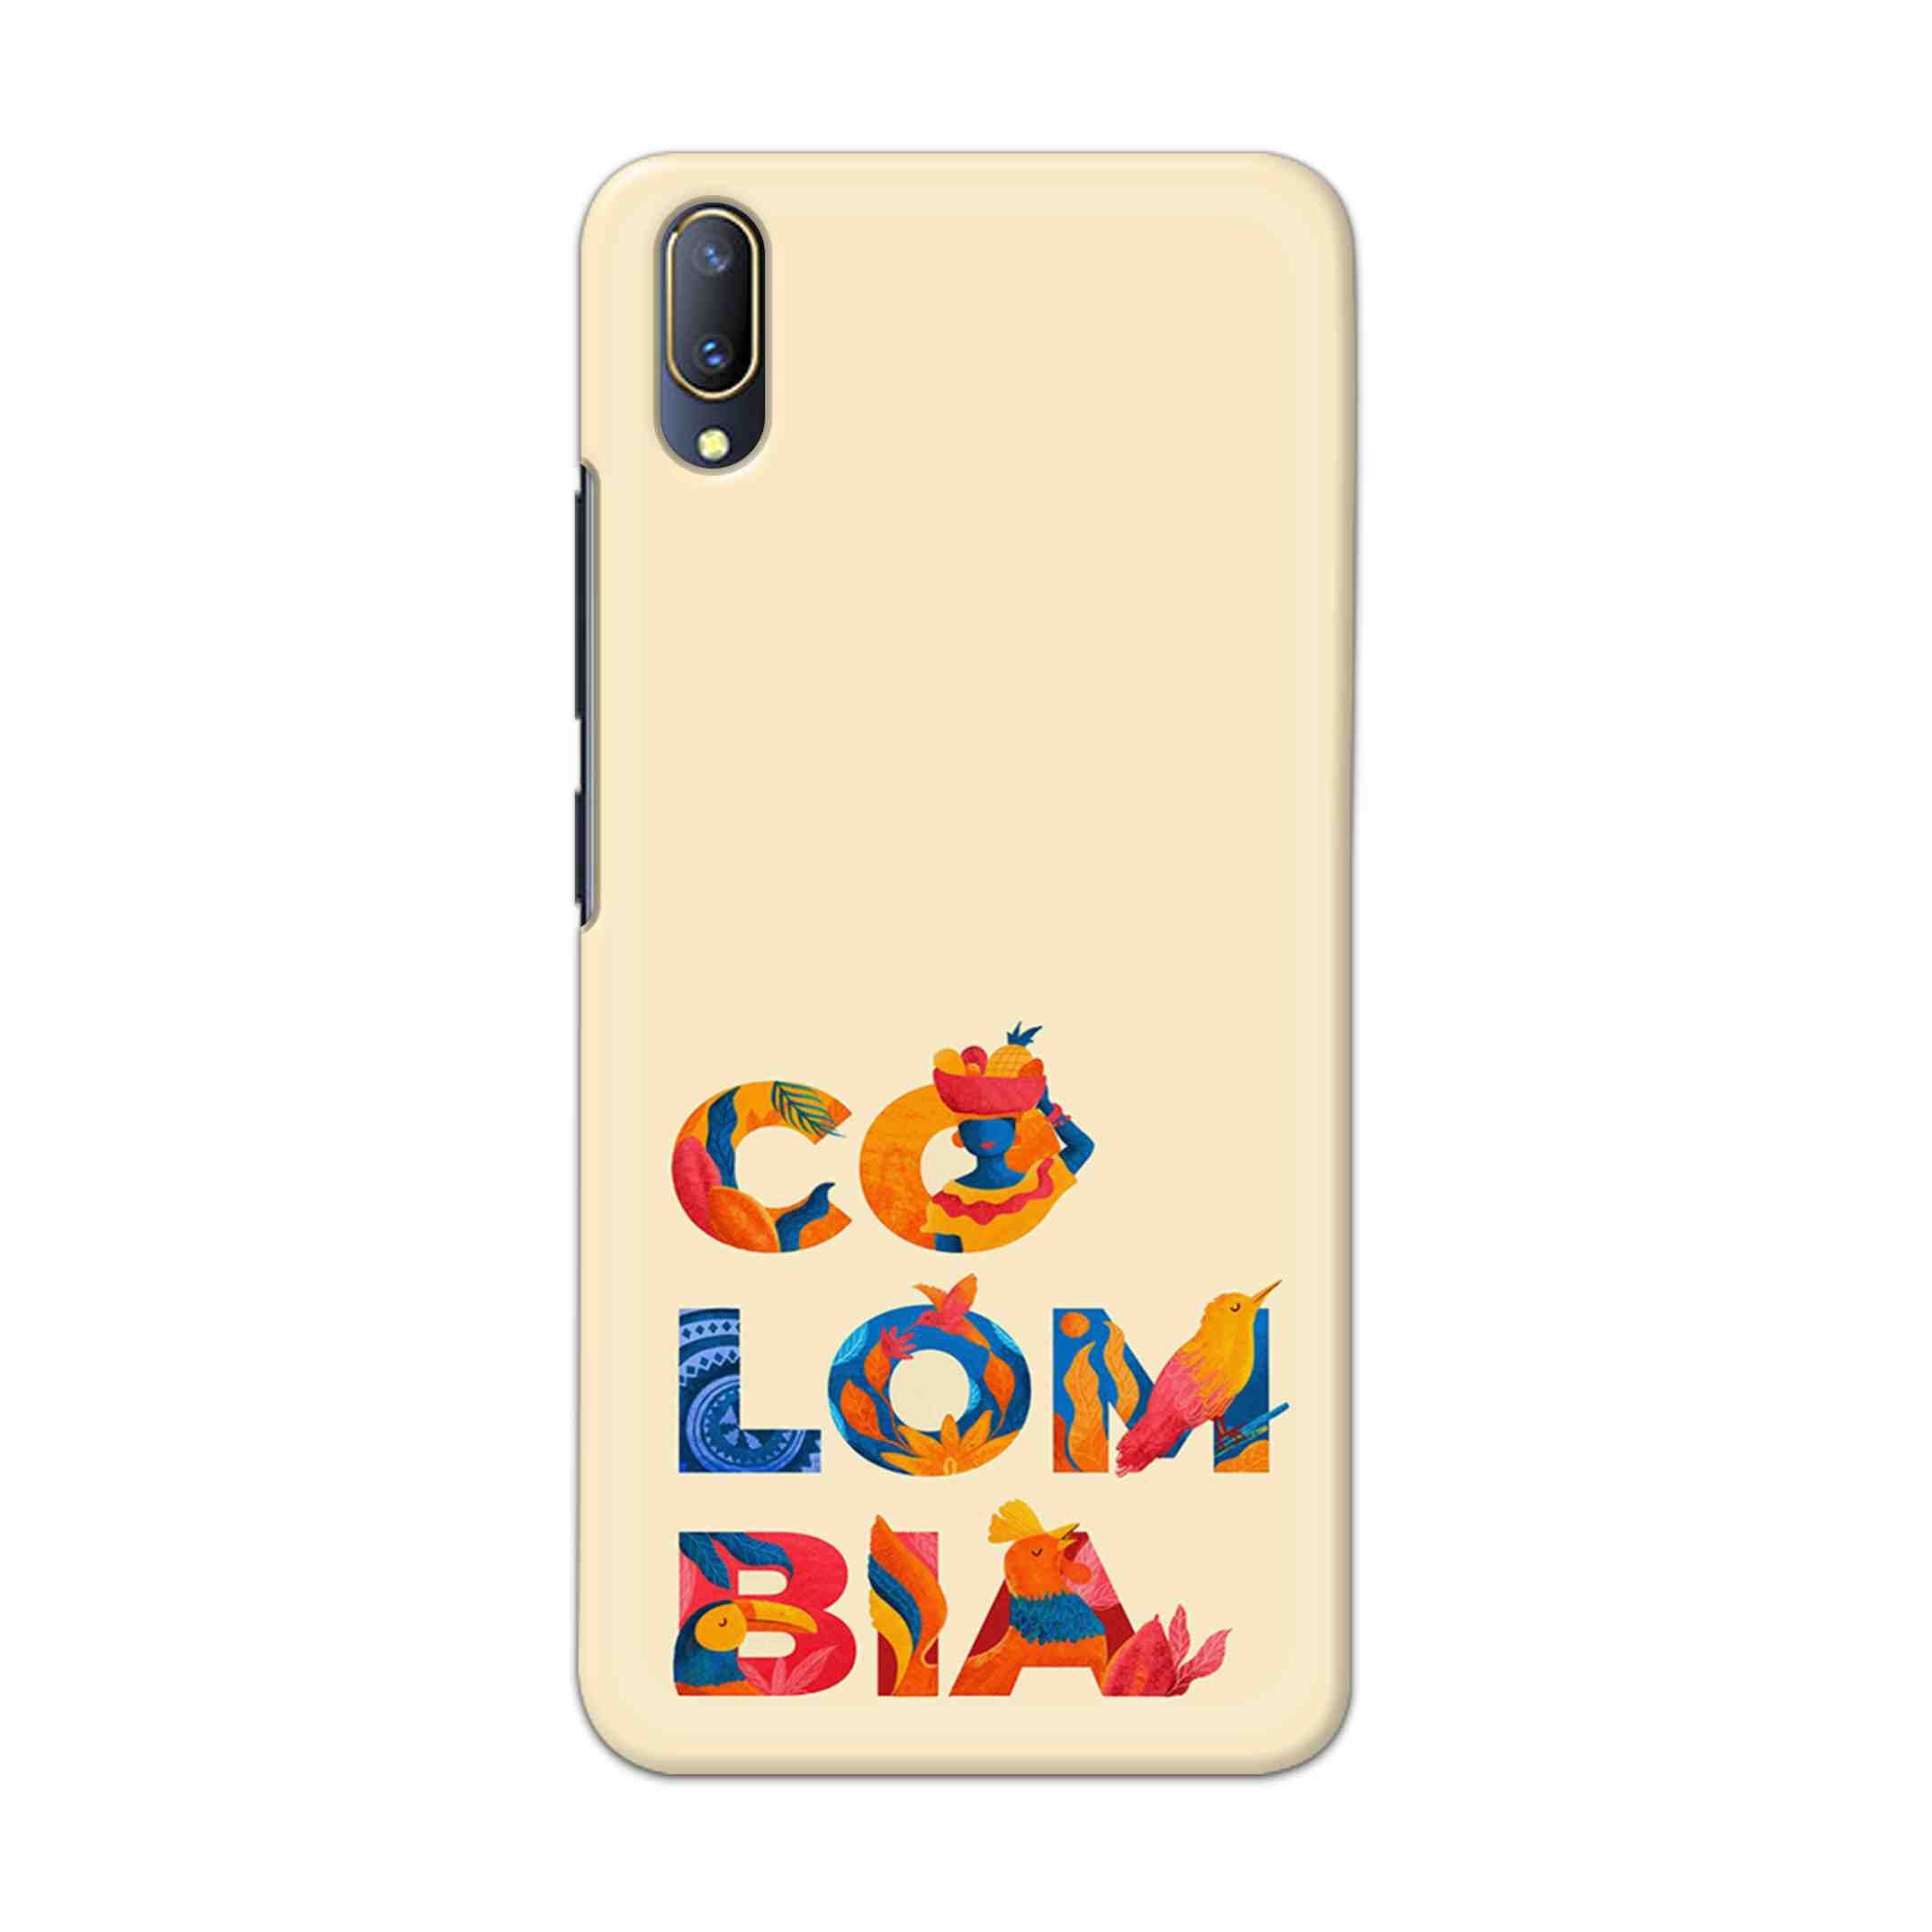 Buy Colombia Hard Back Mobile Phone Case Cover For V11 PRO Online